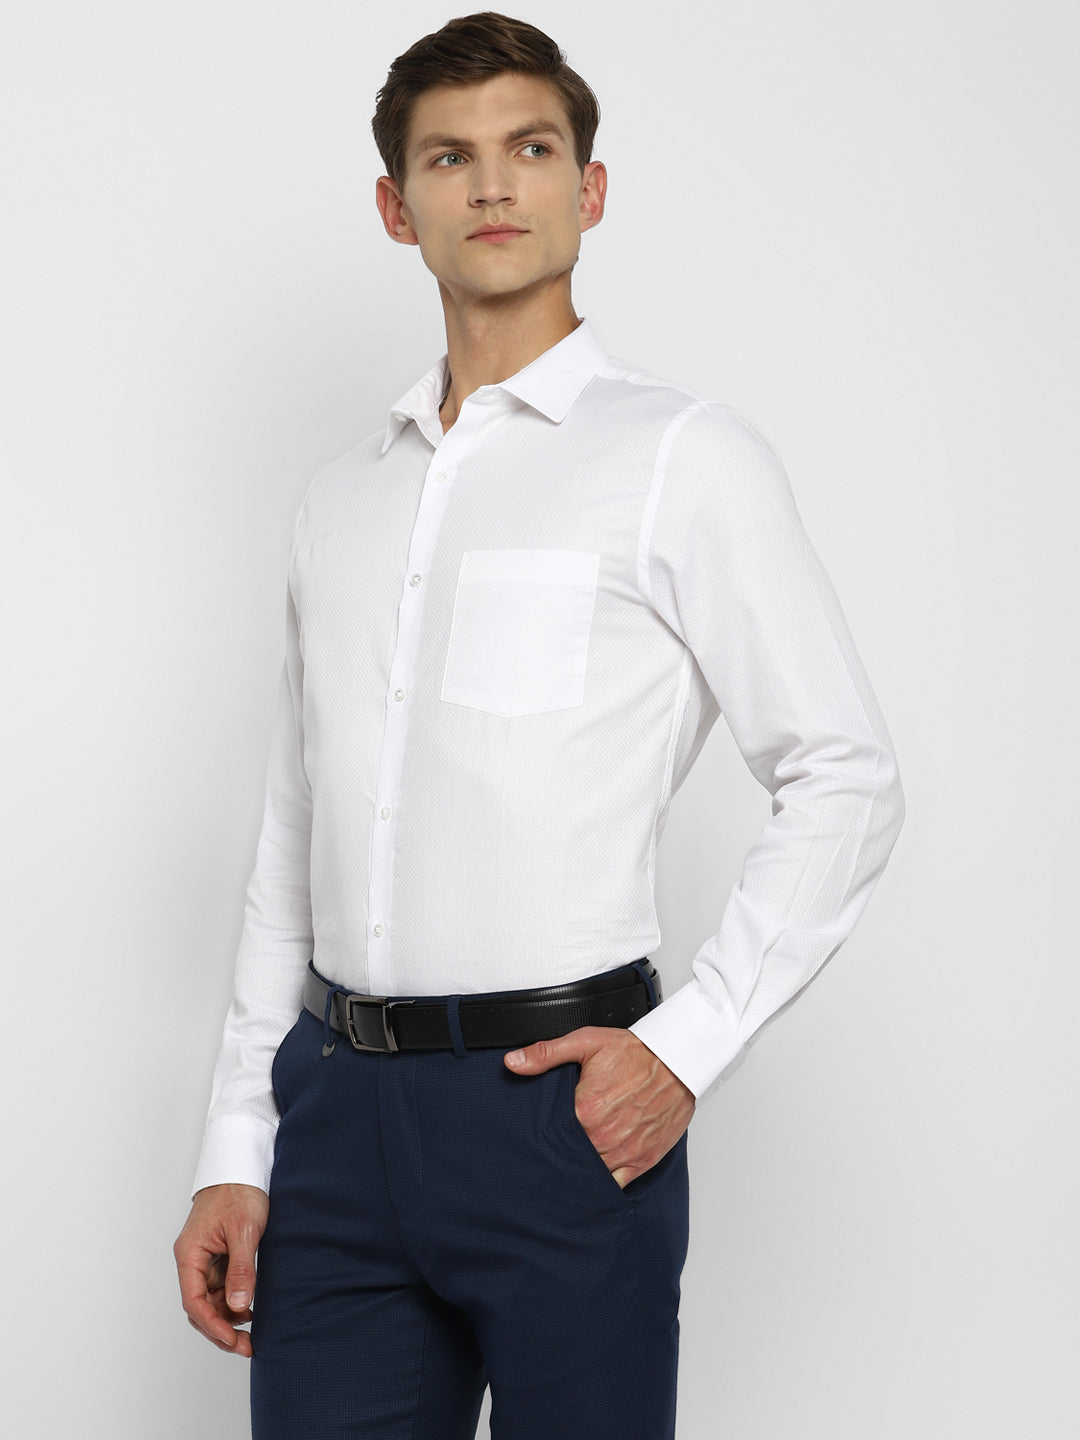 White Self Design Cotton Slim Fit Shirts